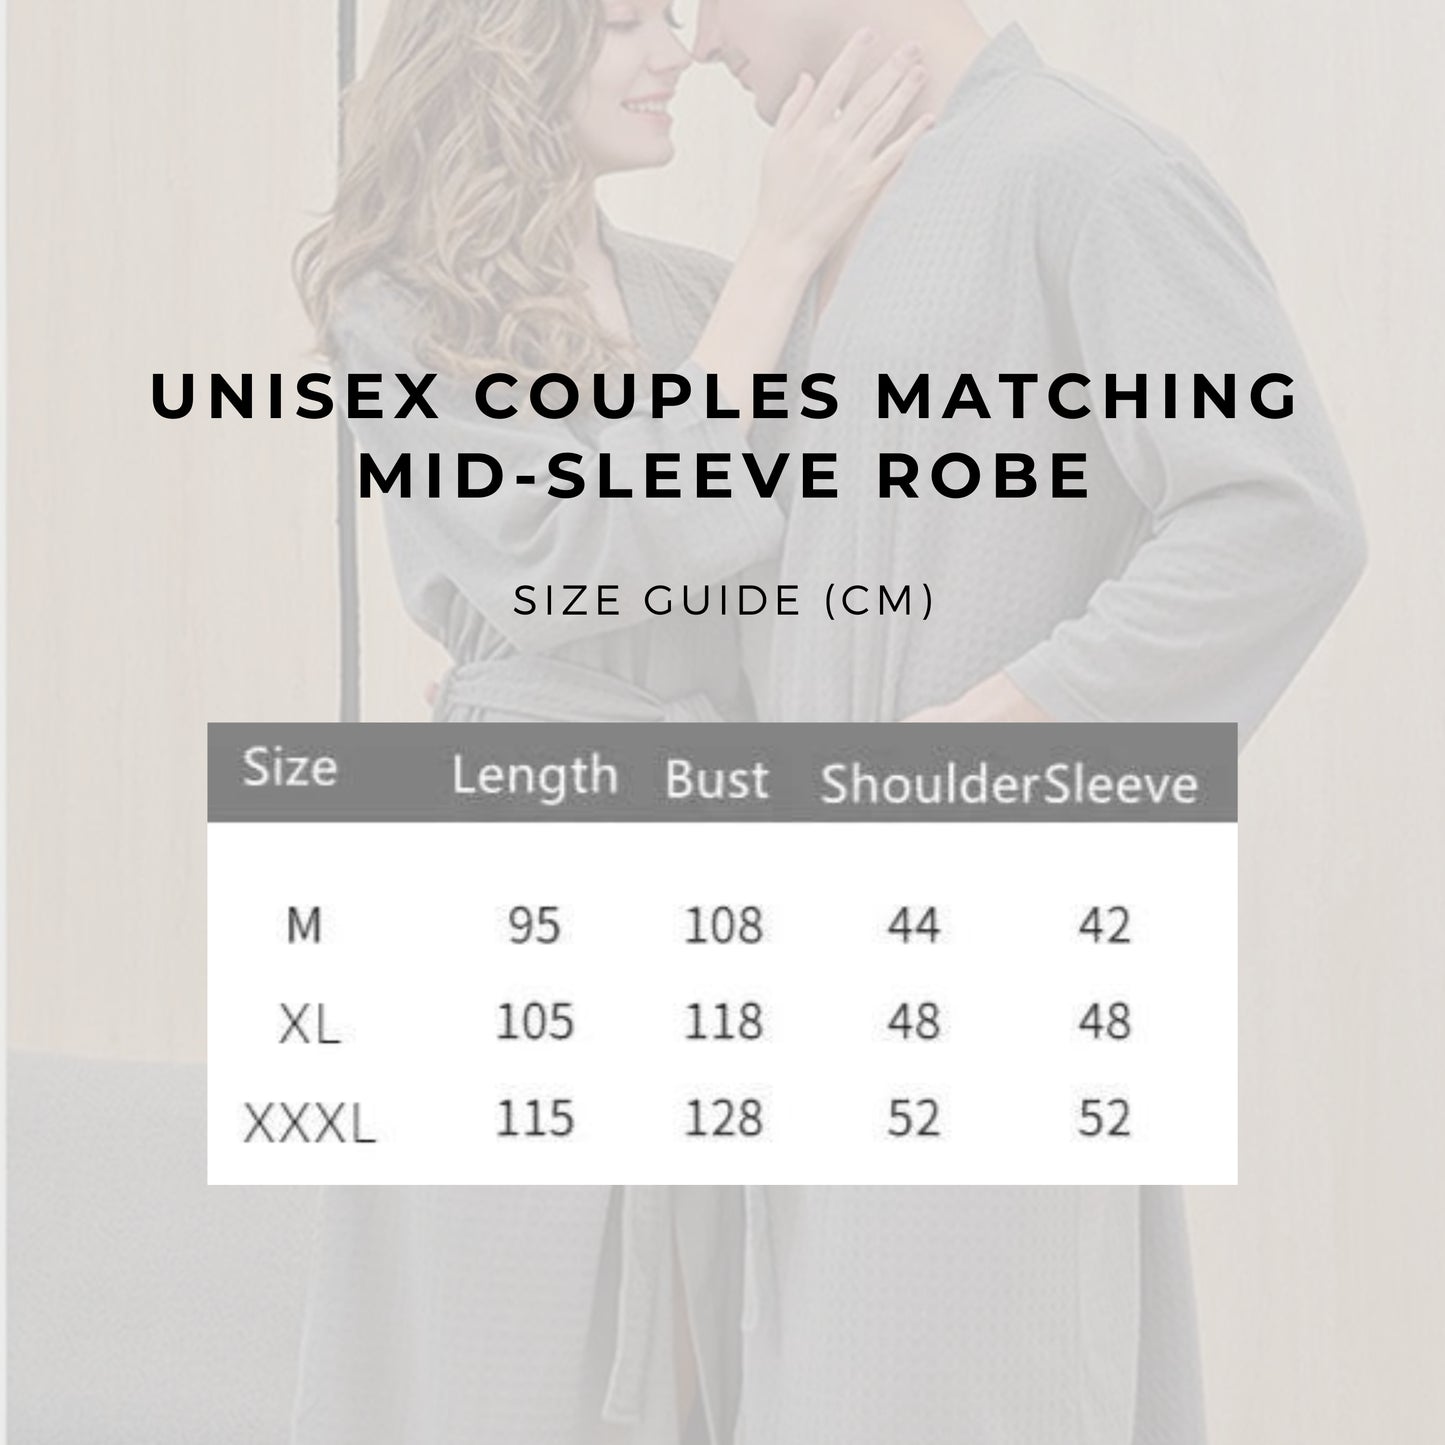 Unisex Couples Matching Mid-Sleeve Robe